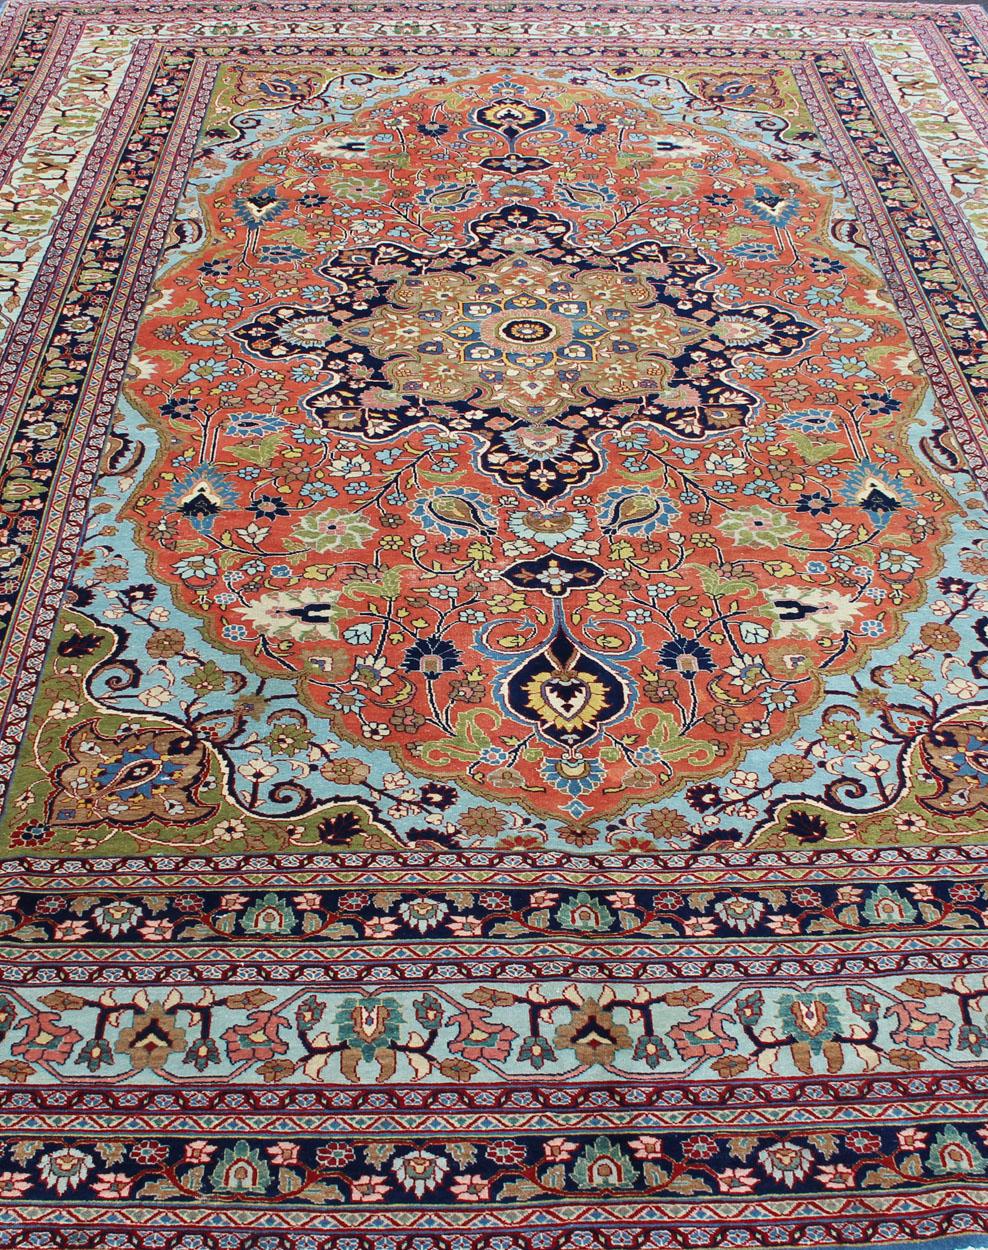 Antique Fine Persian Classic Design Tabriz Rug in Orange, Blue & Multi Colors For Sale 2